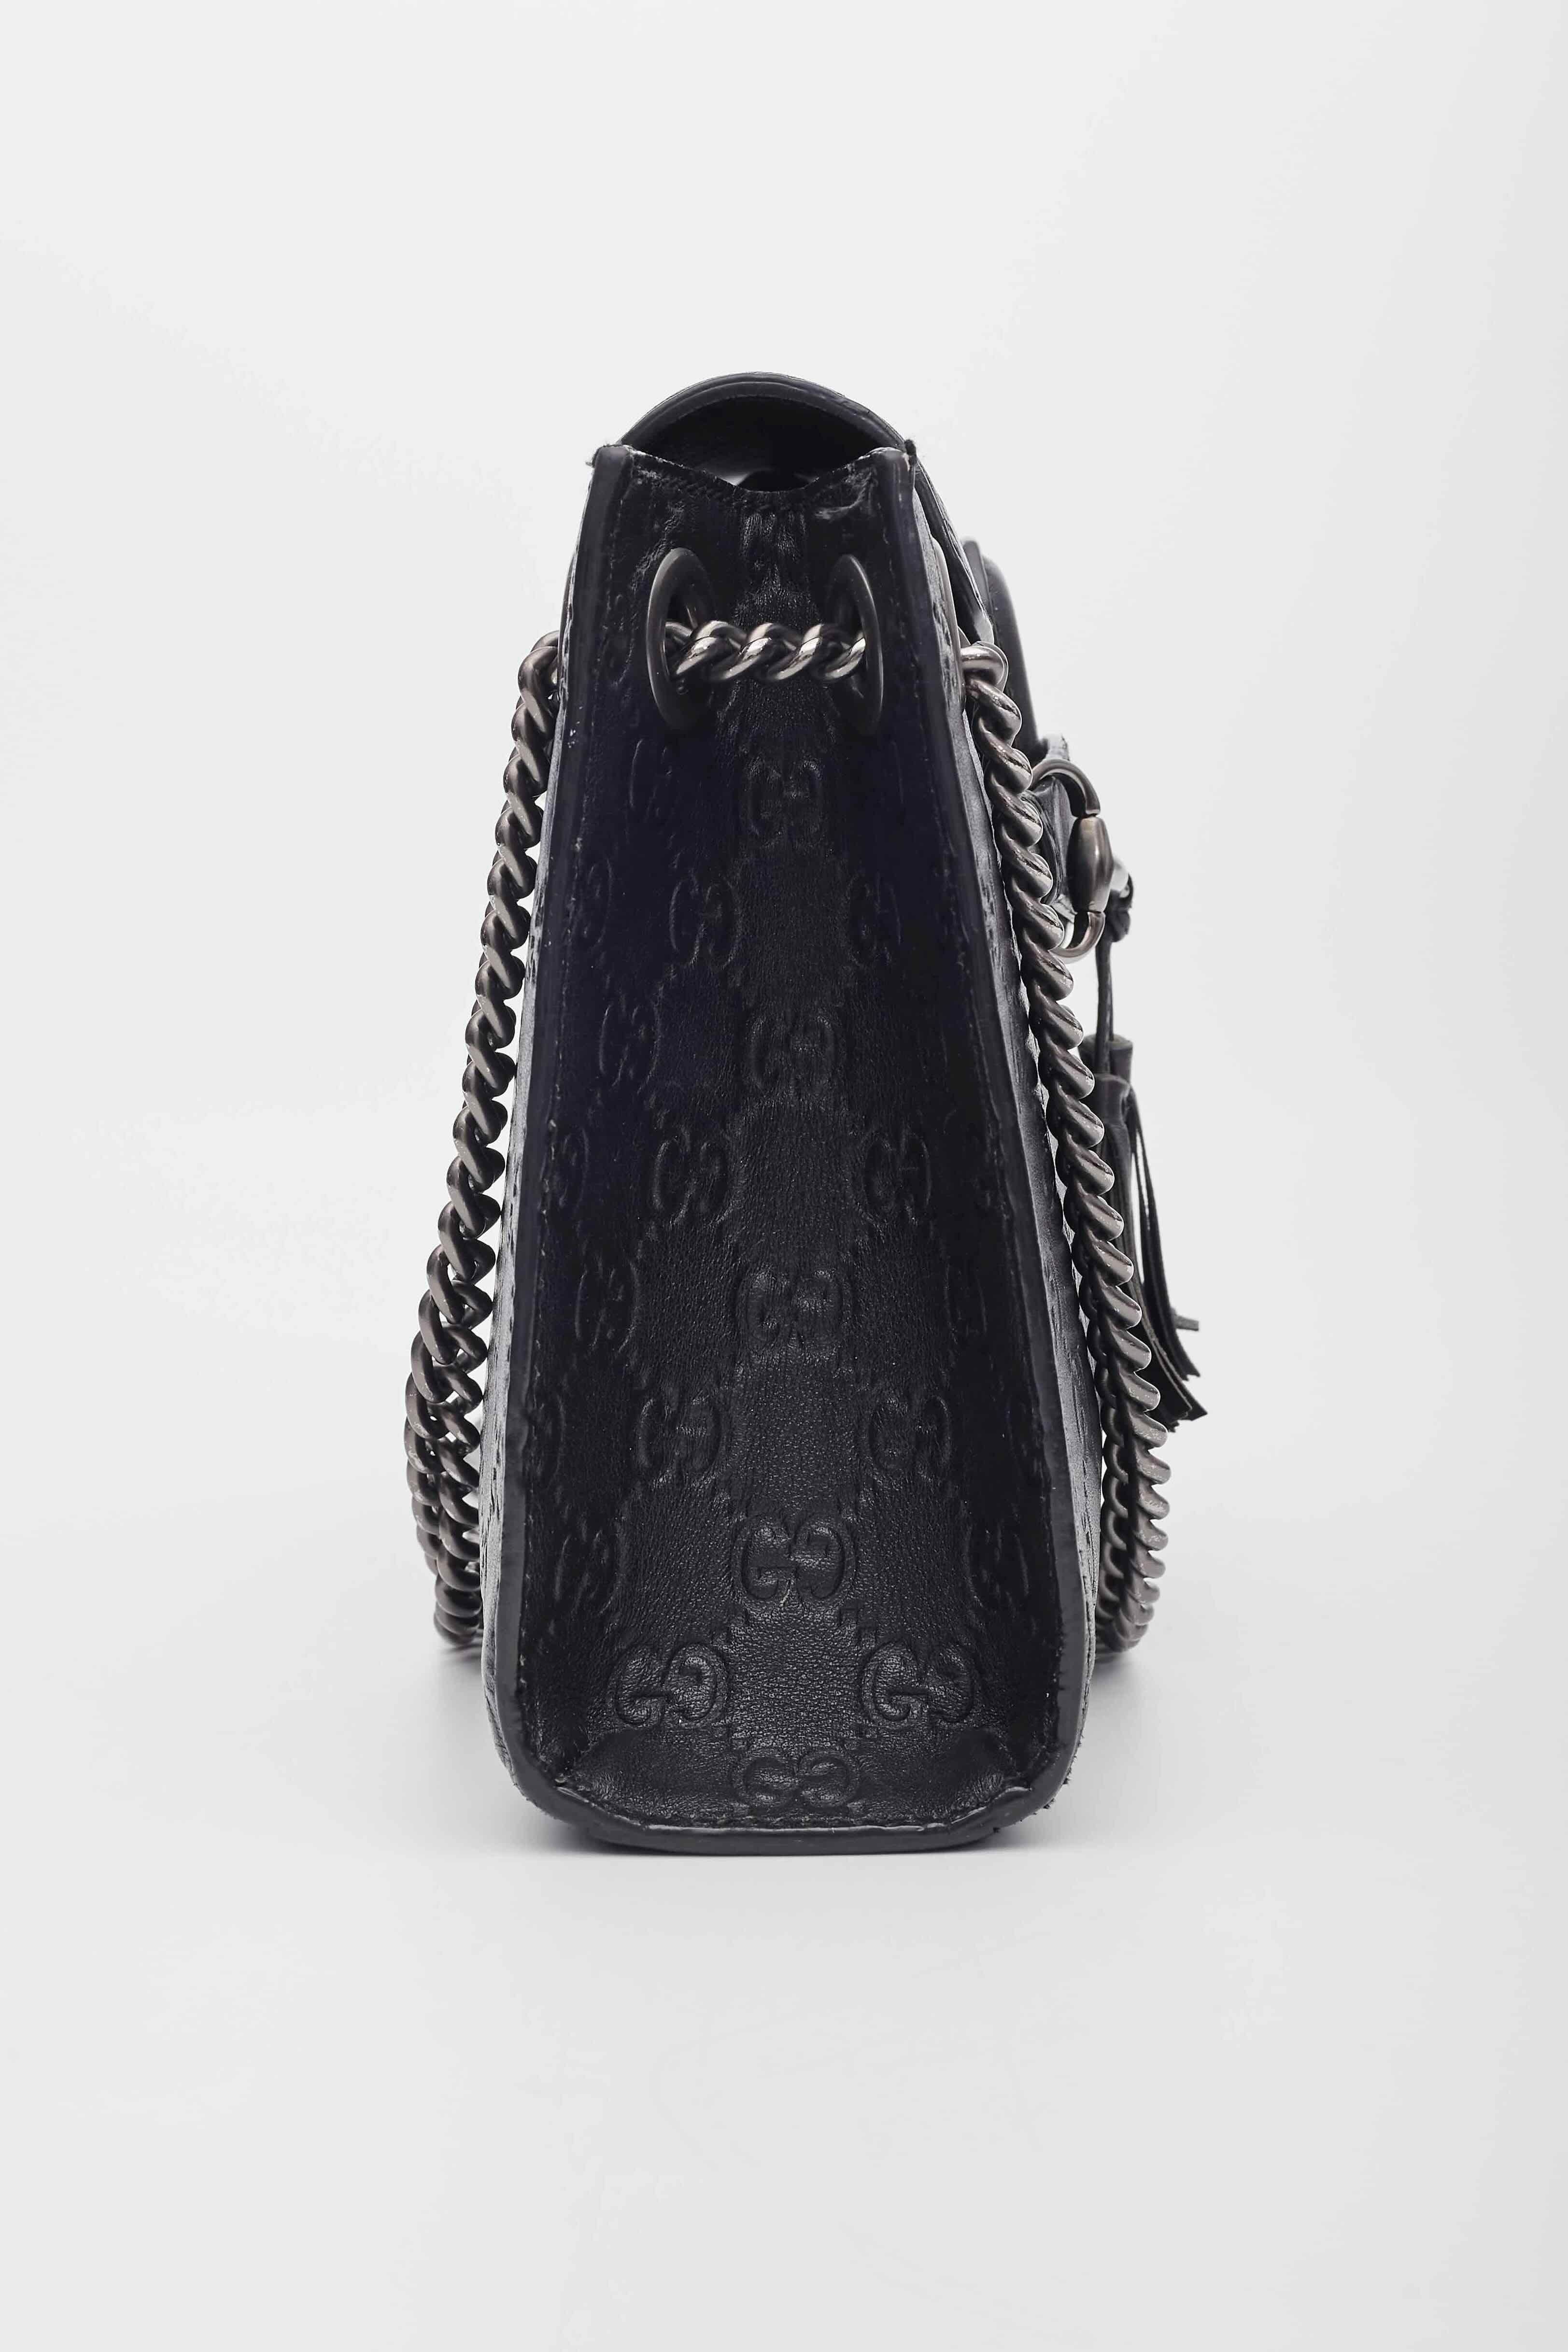 Gucci Black Leather Guccissima Emily Chain Shoulder Bag Small For Sale 1